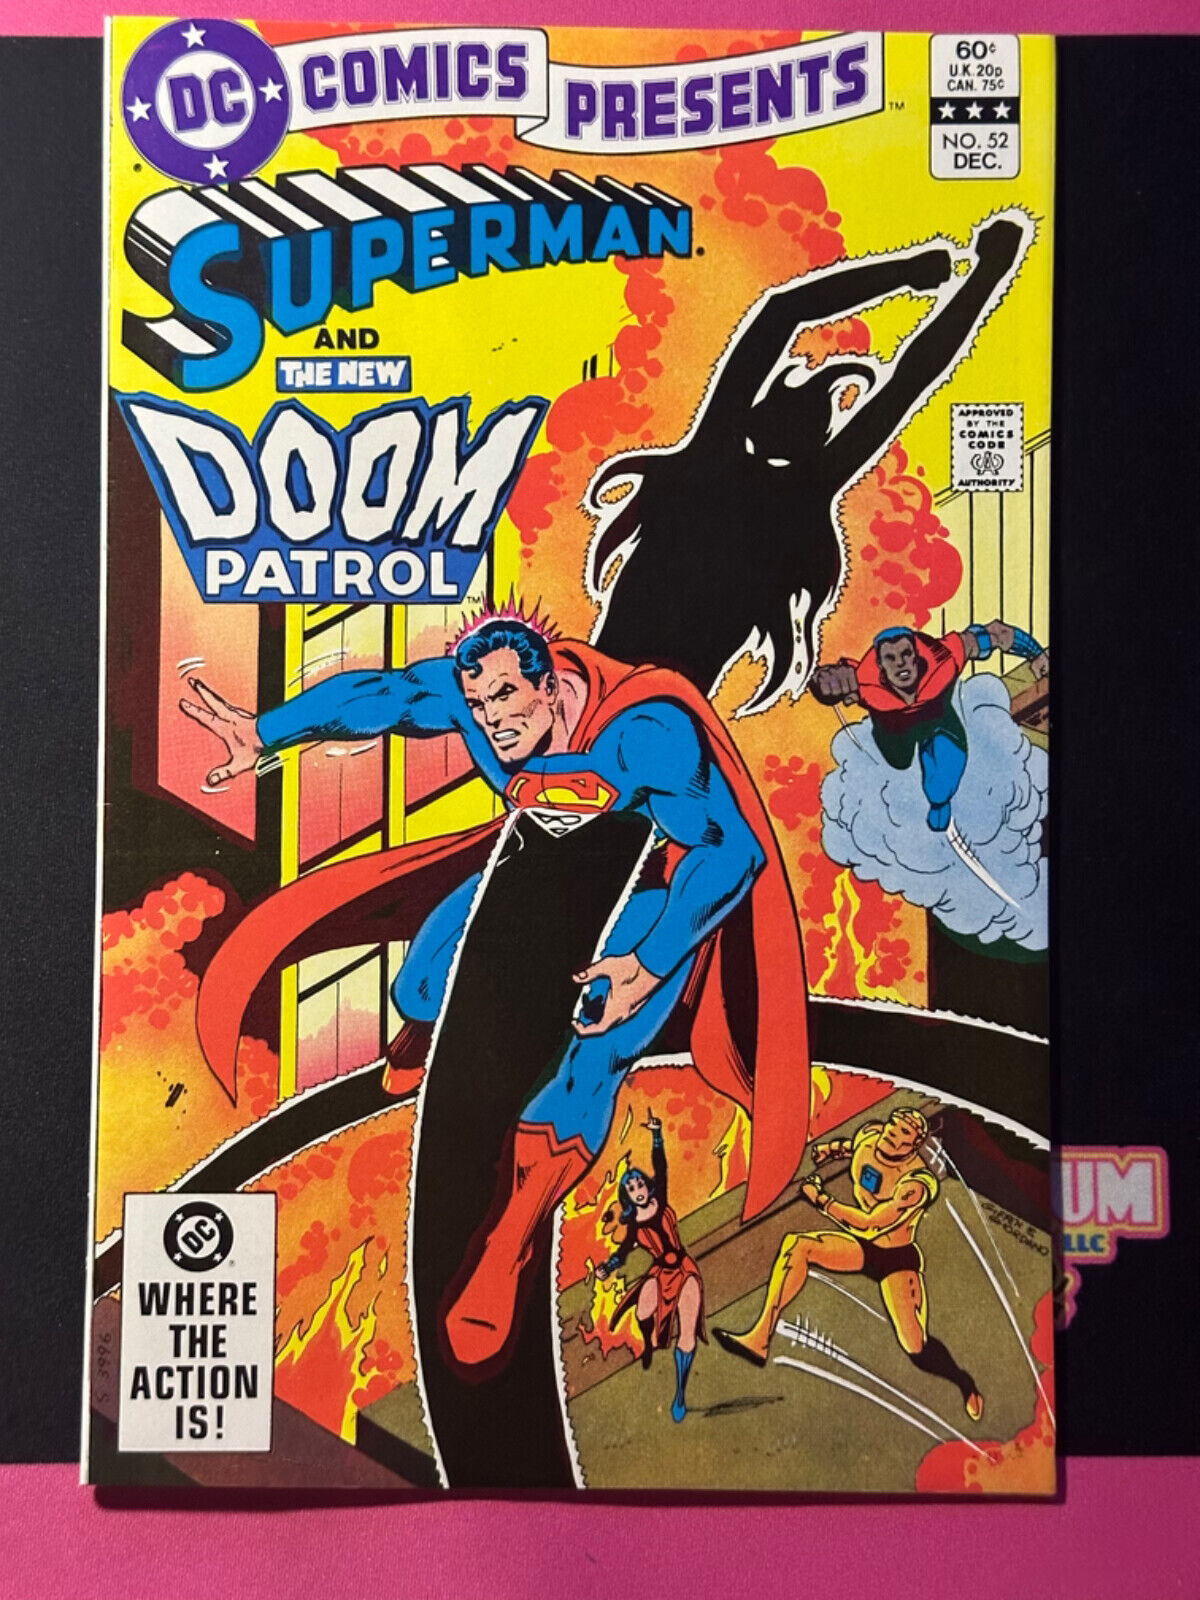 DC Comics Presents #52 Doom Patrol Superman 1st appearance Ambush Bug 1982